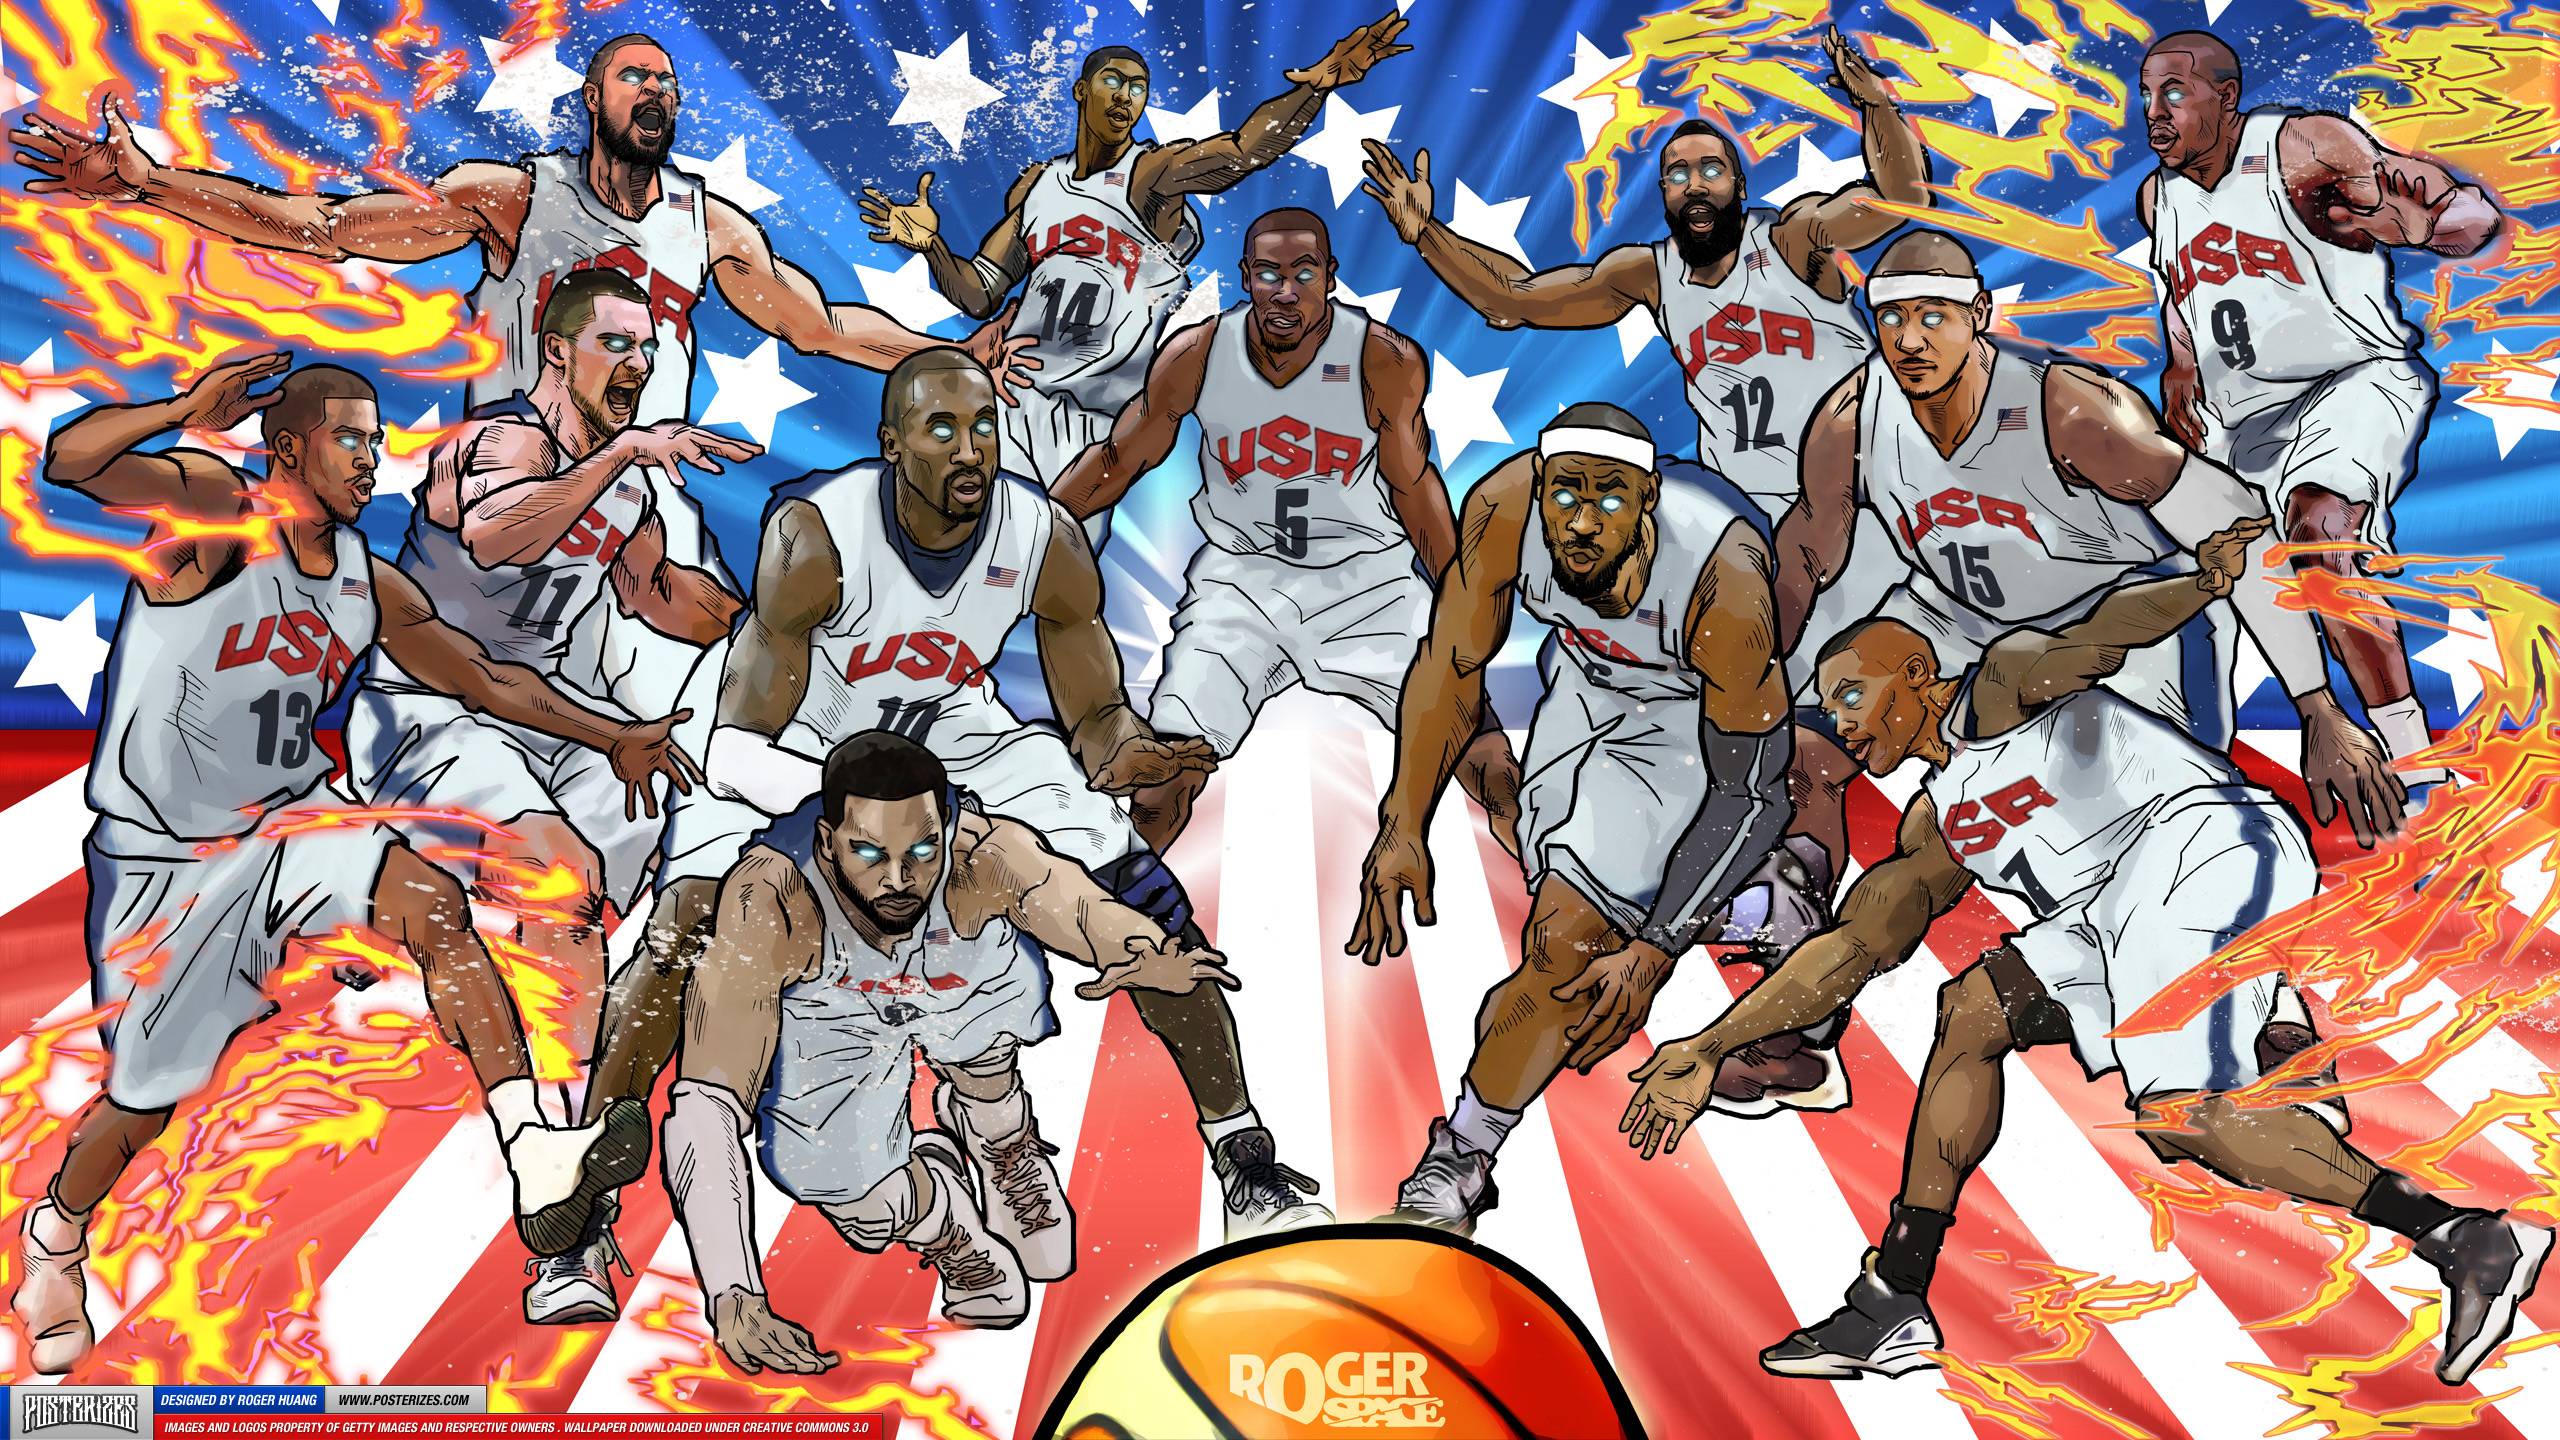 Free download NBA Basketball Wallpaper 2015 [2560x1440]